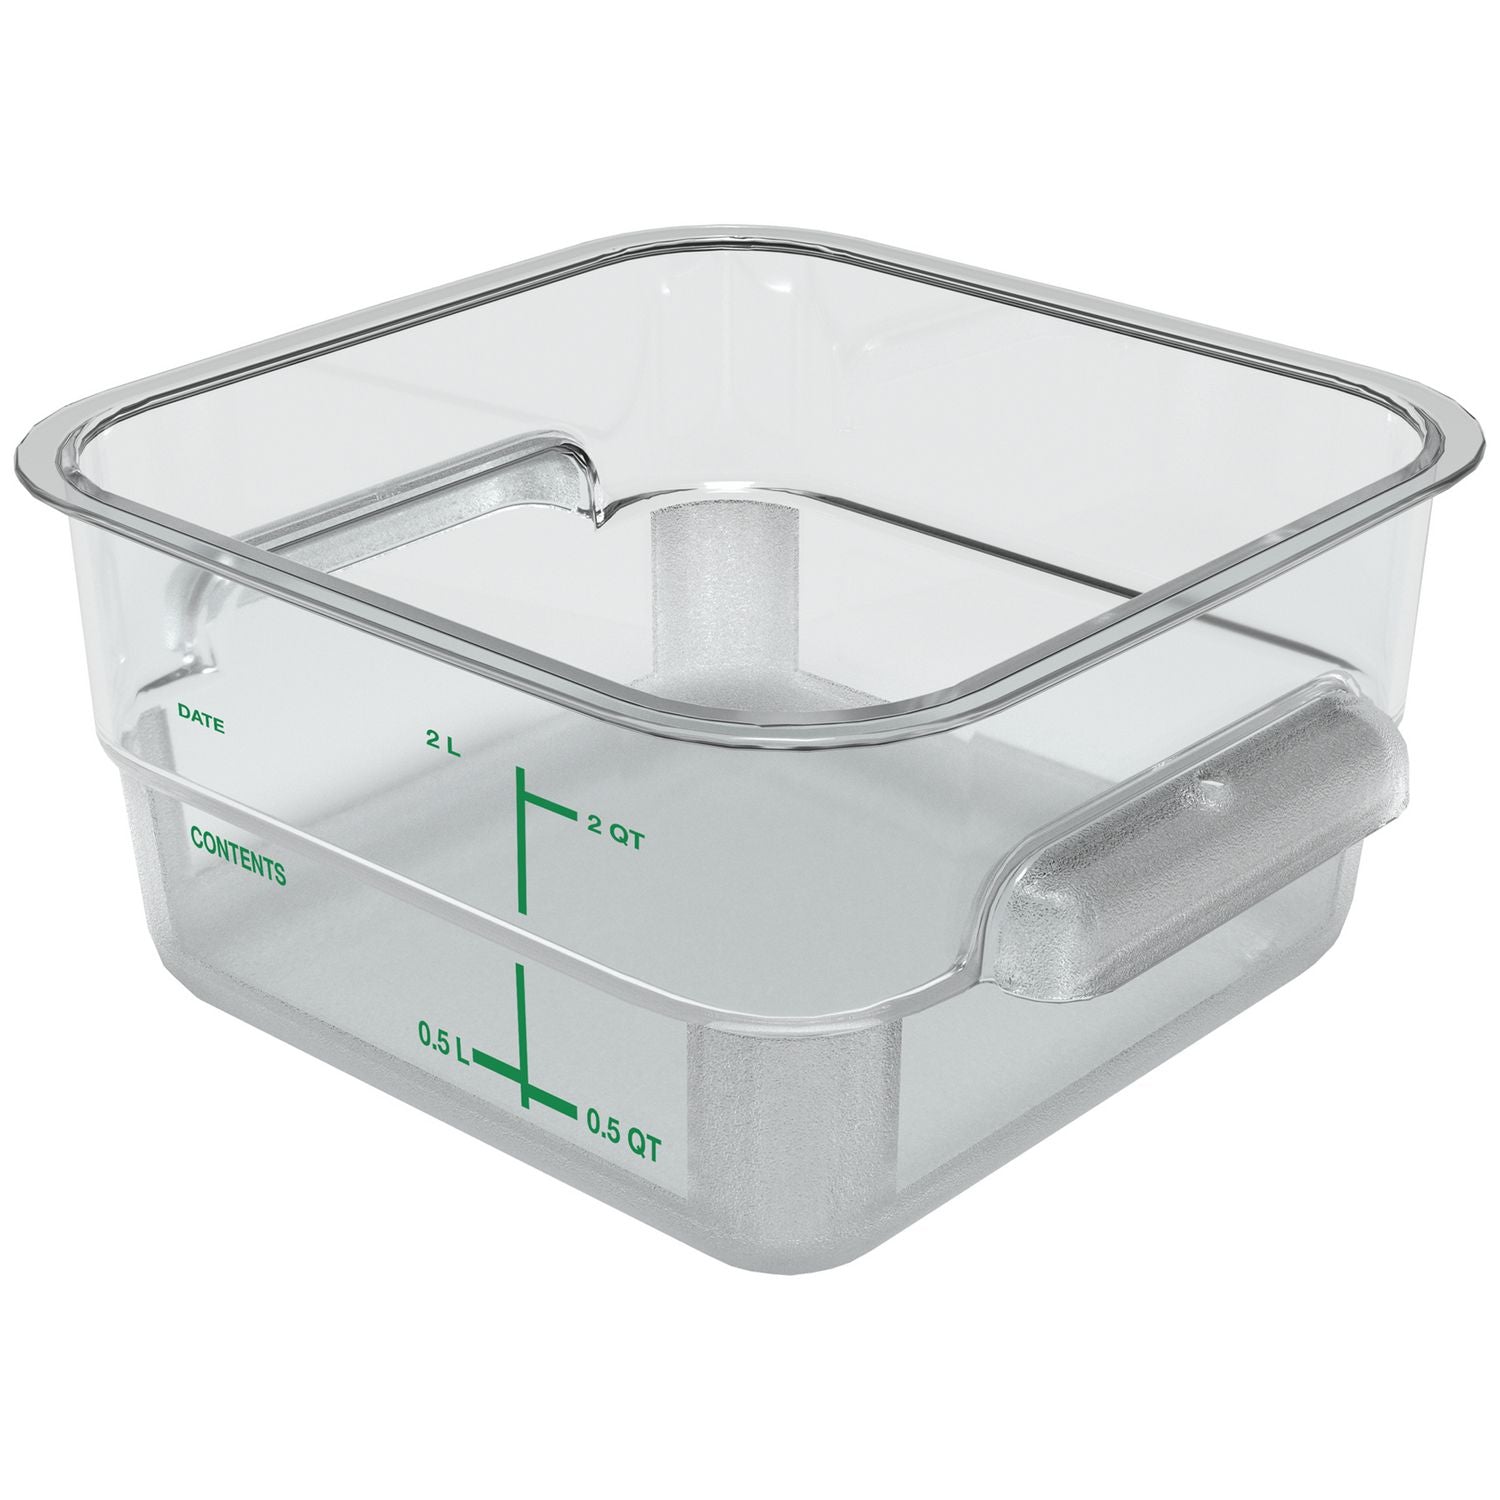 squares-polycarbonate-food-storage-container-2-qt-713-x-713-x-38-clear-plastic_cfs1195007 - 1